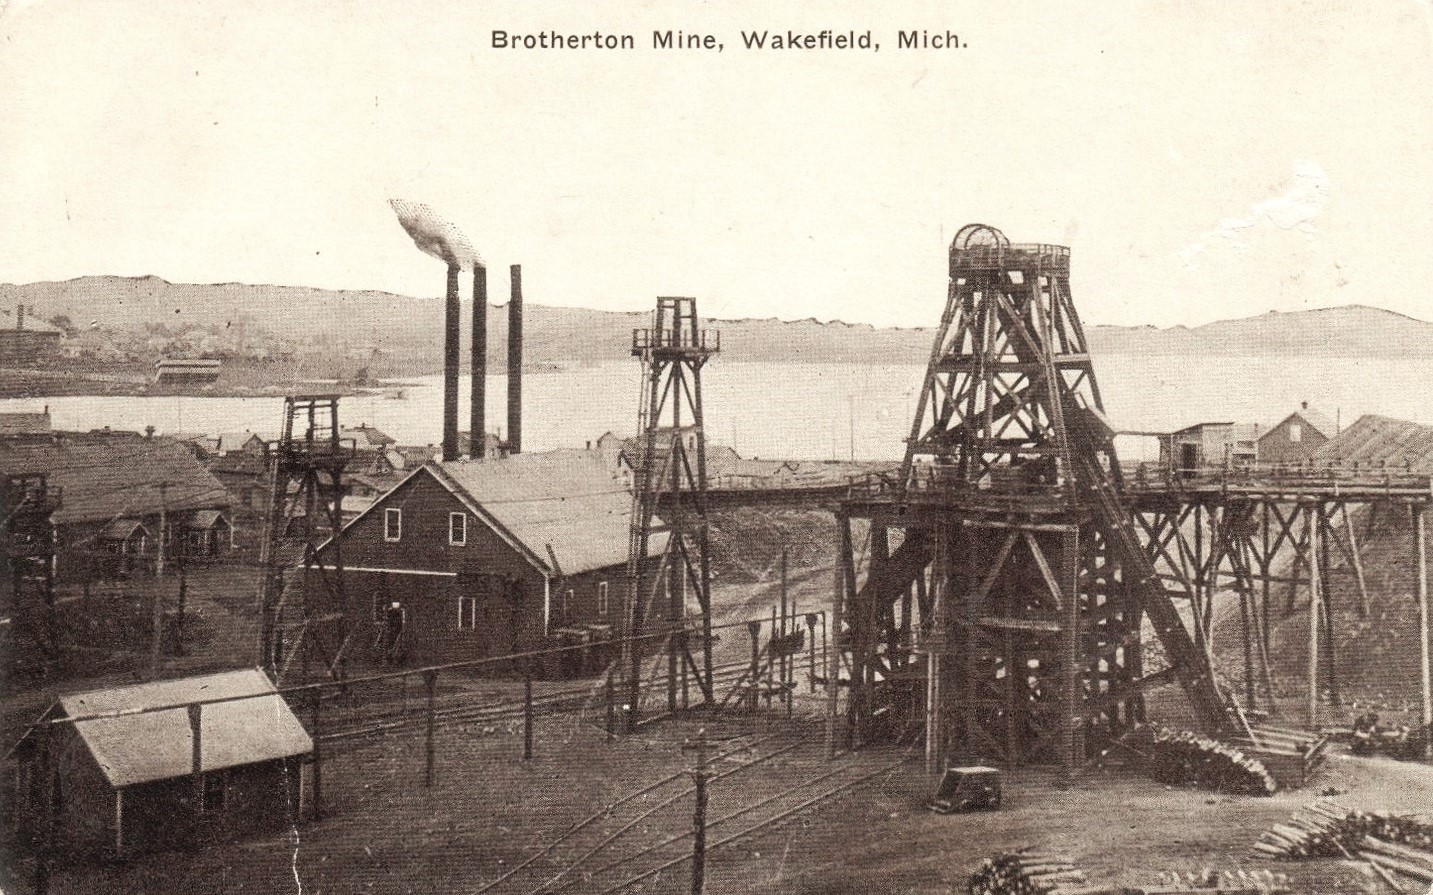 Brotherton Mine in Wakefield MI